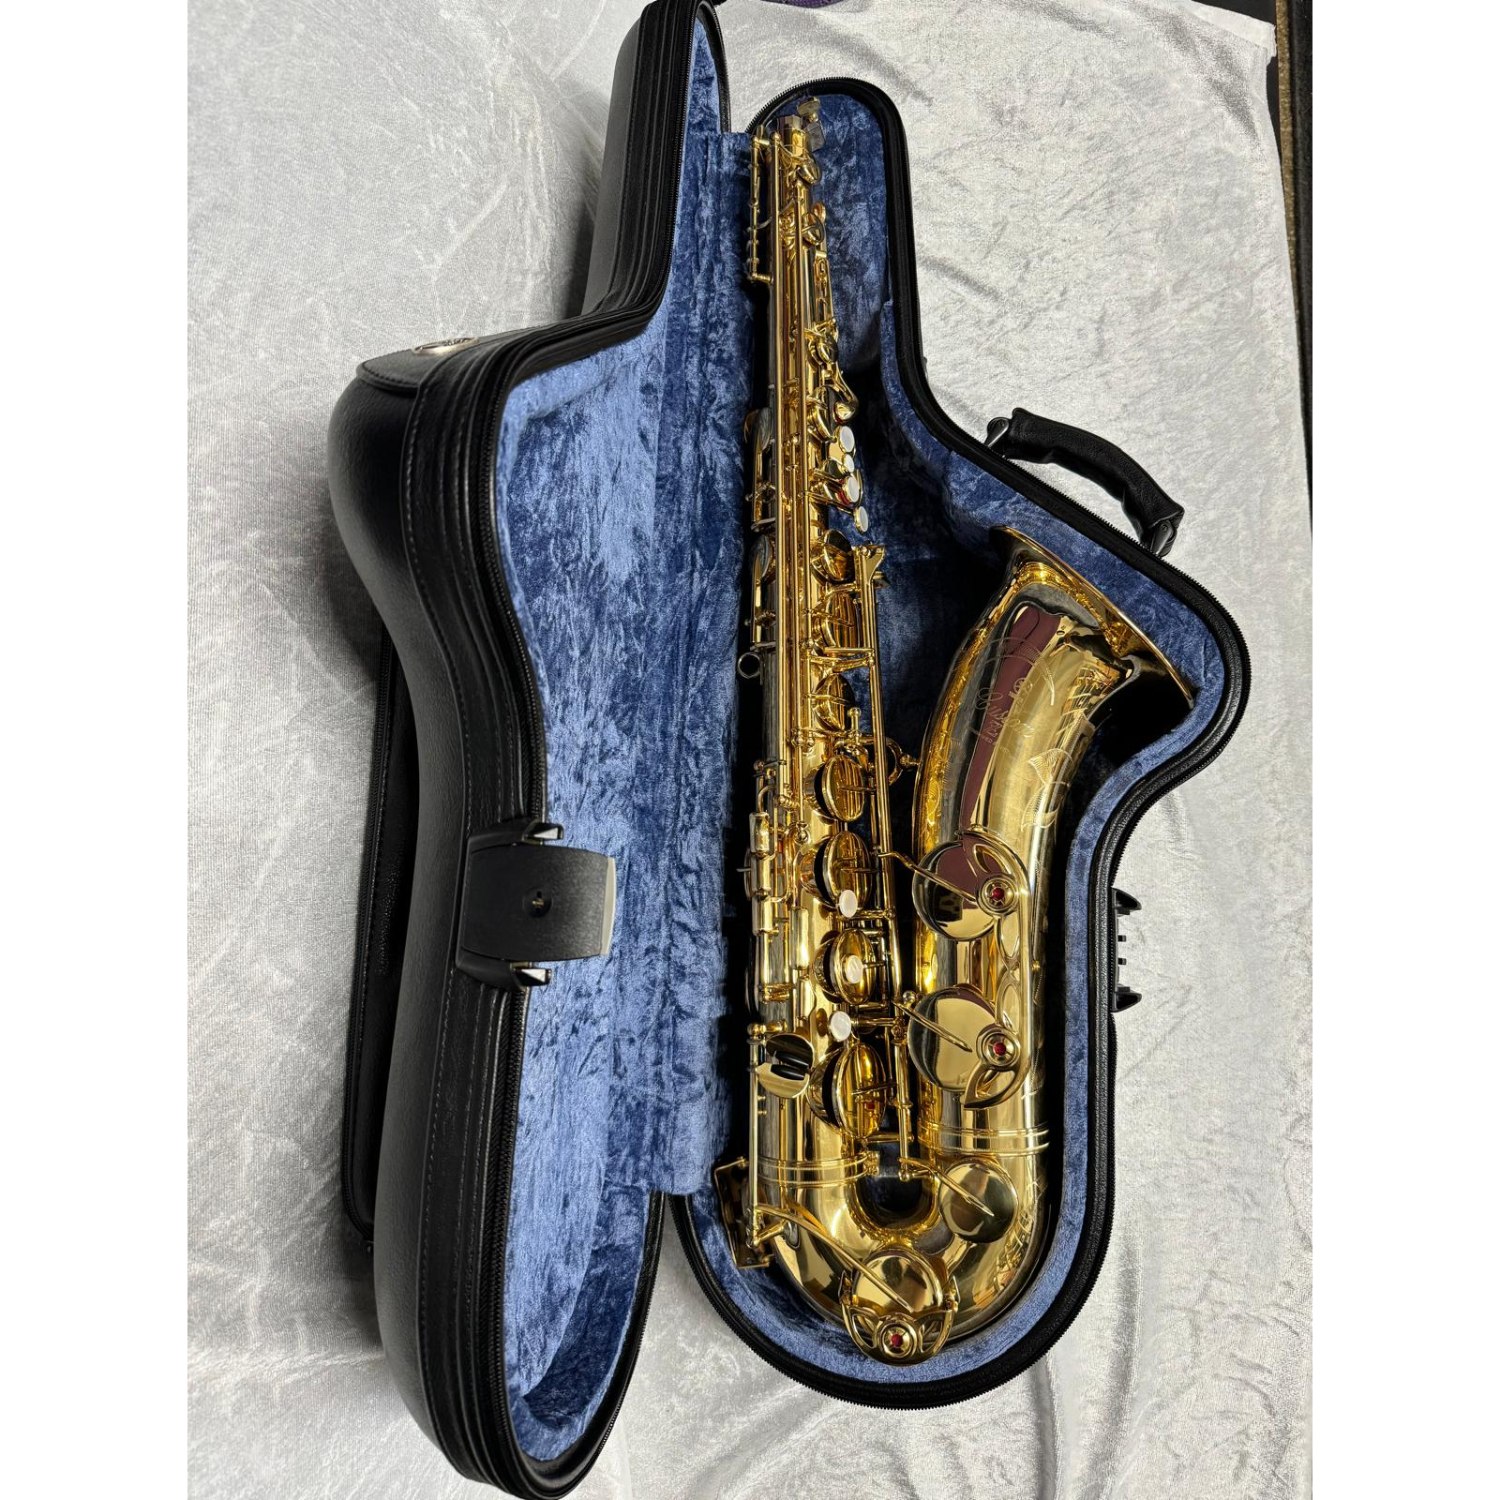 Tenor saxophone case laying open with saxophone inside, showing blue velvet lining; against white velvet background